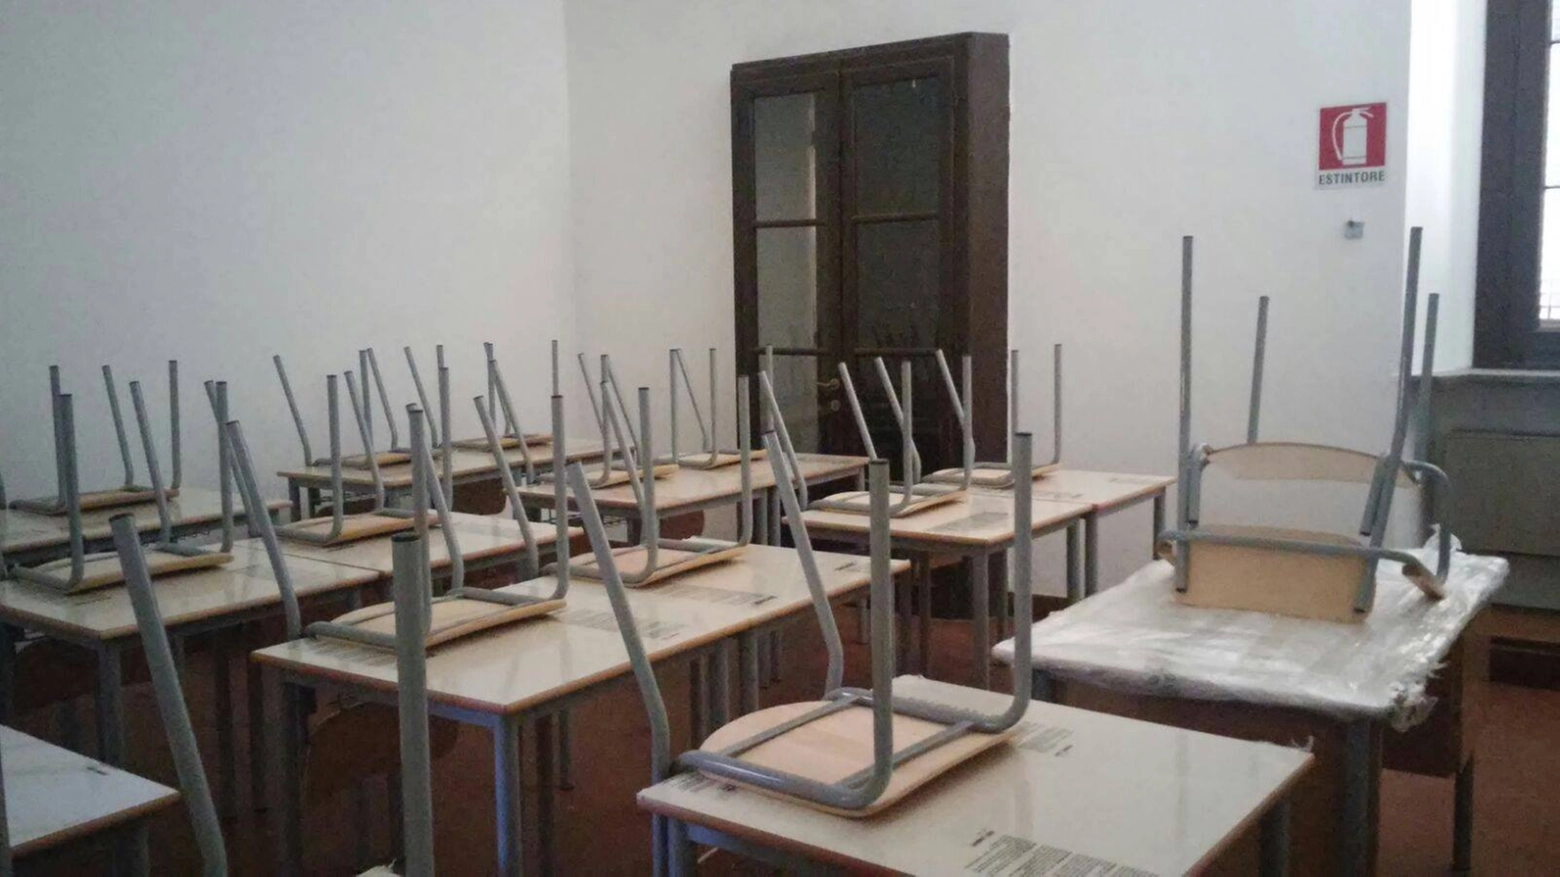 Scuola: un'aula vuota